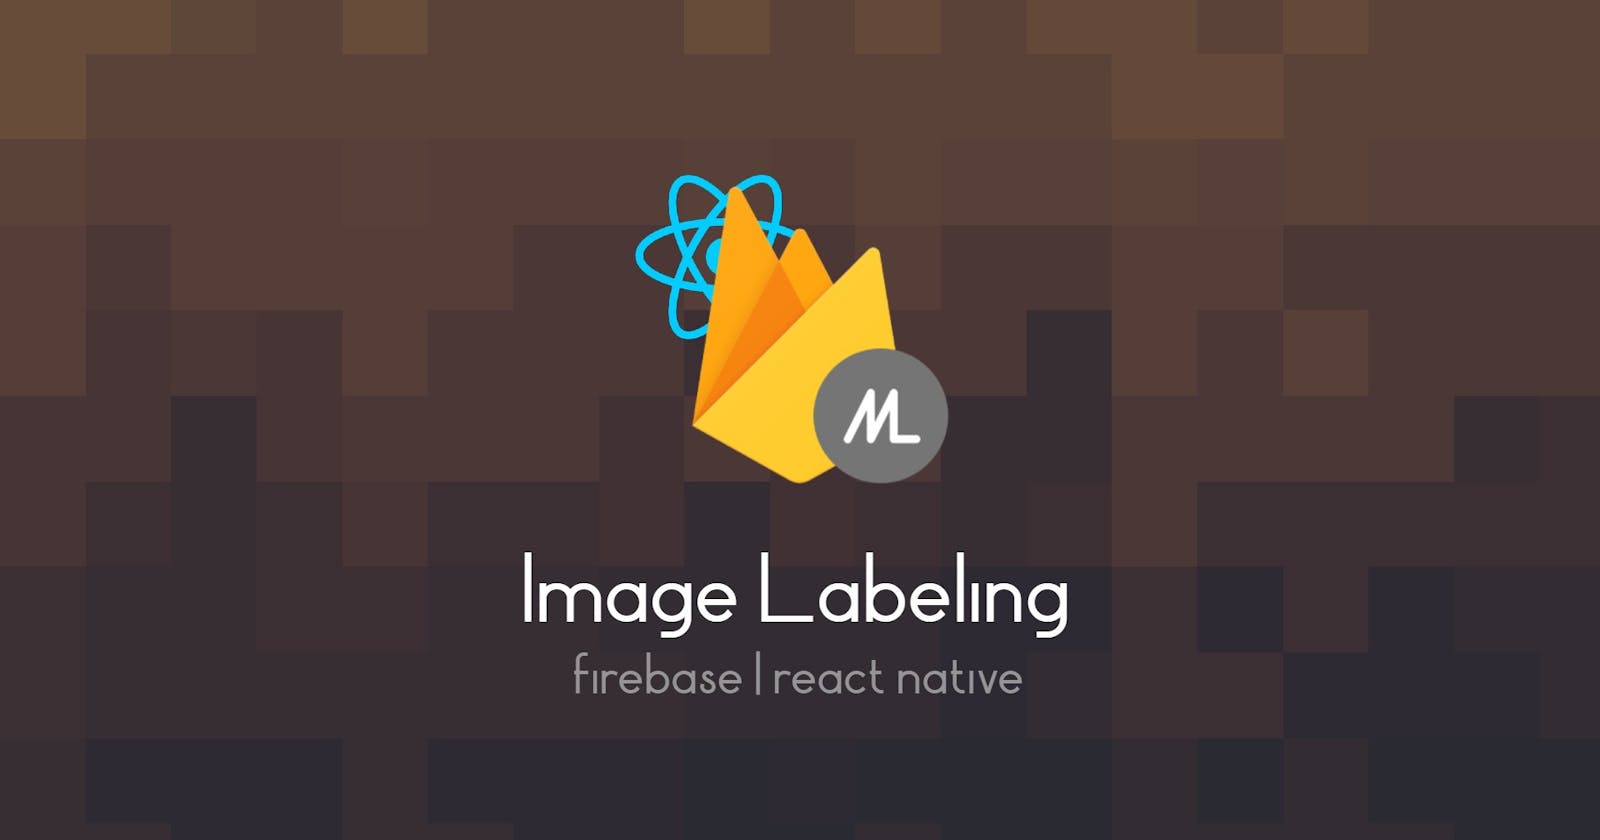 Image Labeling using Firebase ML in React Native